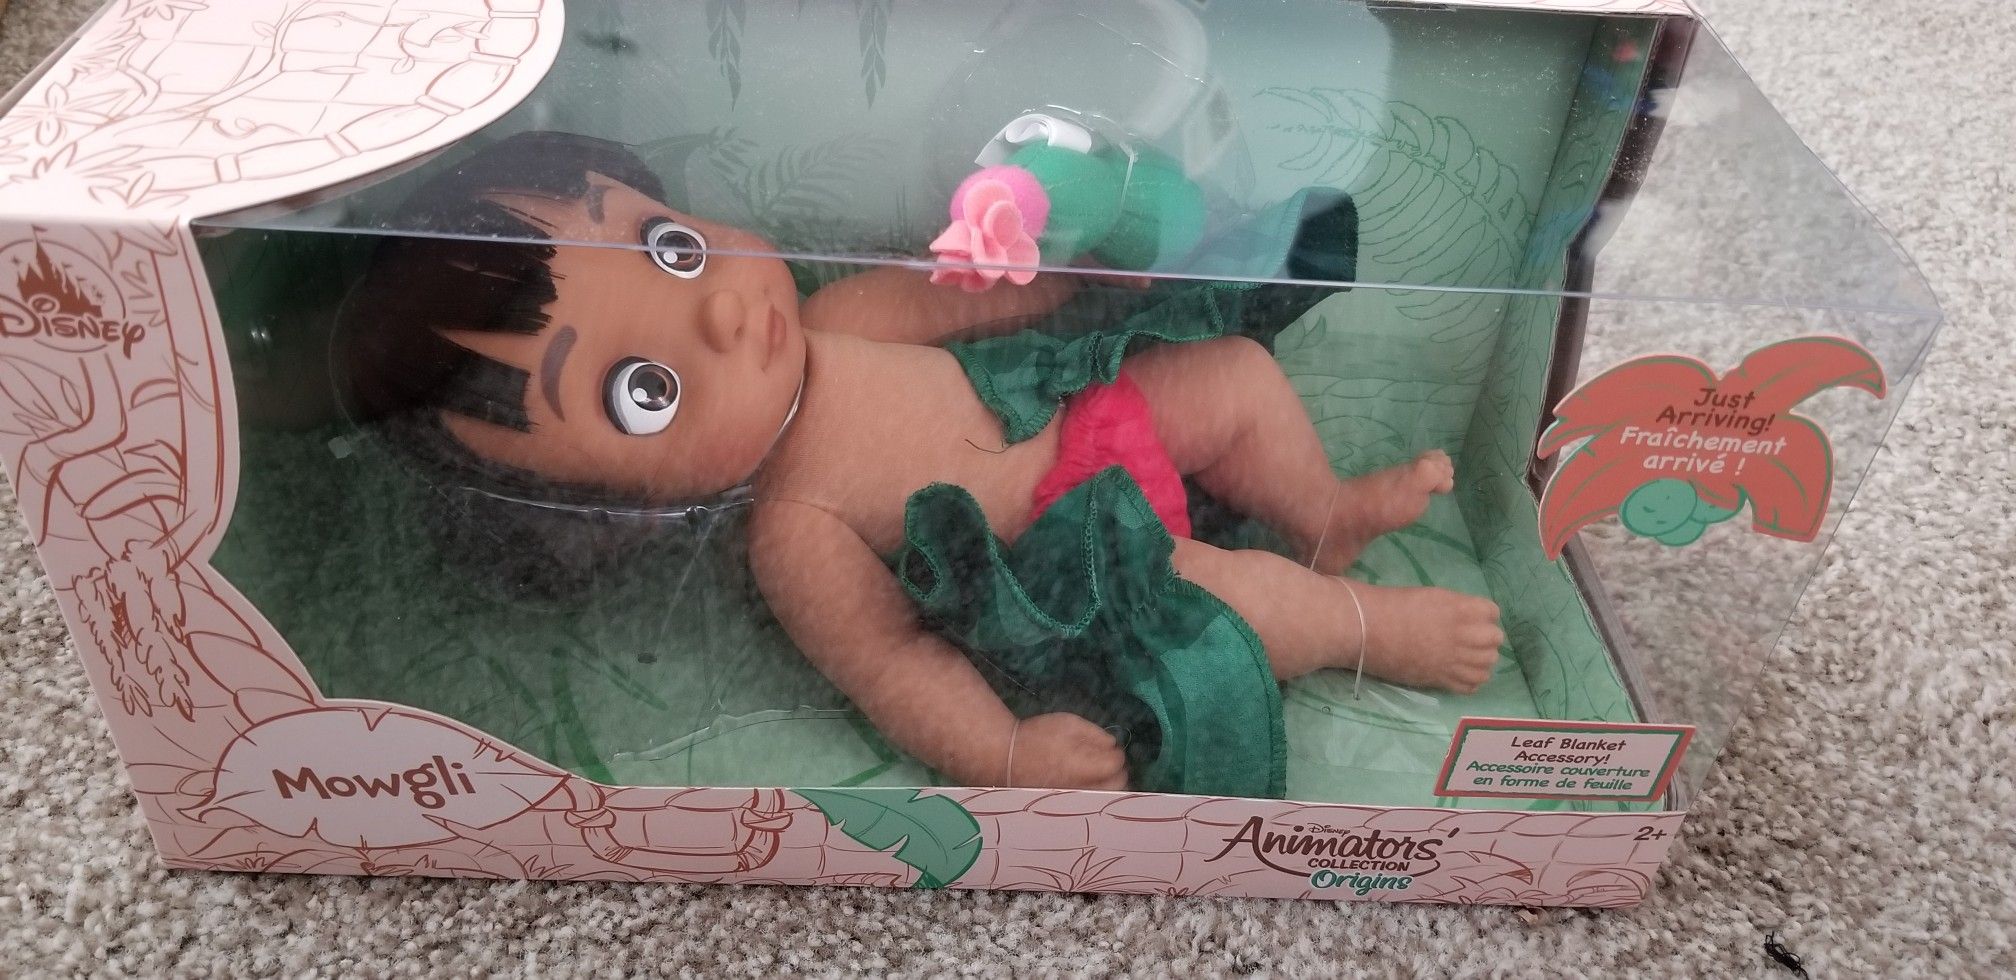 Disney mowgli baby doll animators collection origin